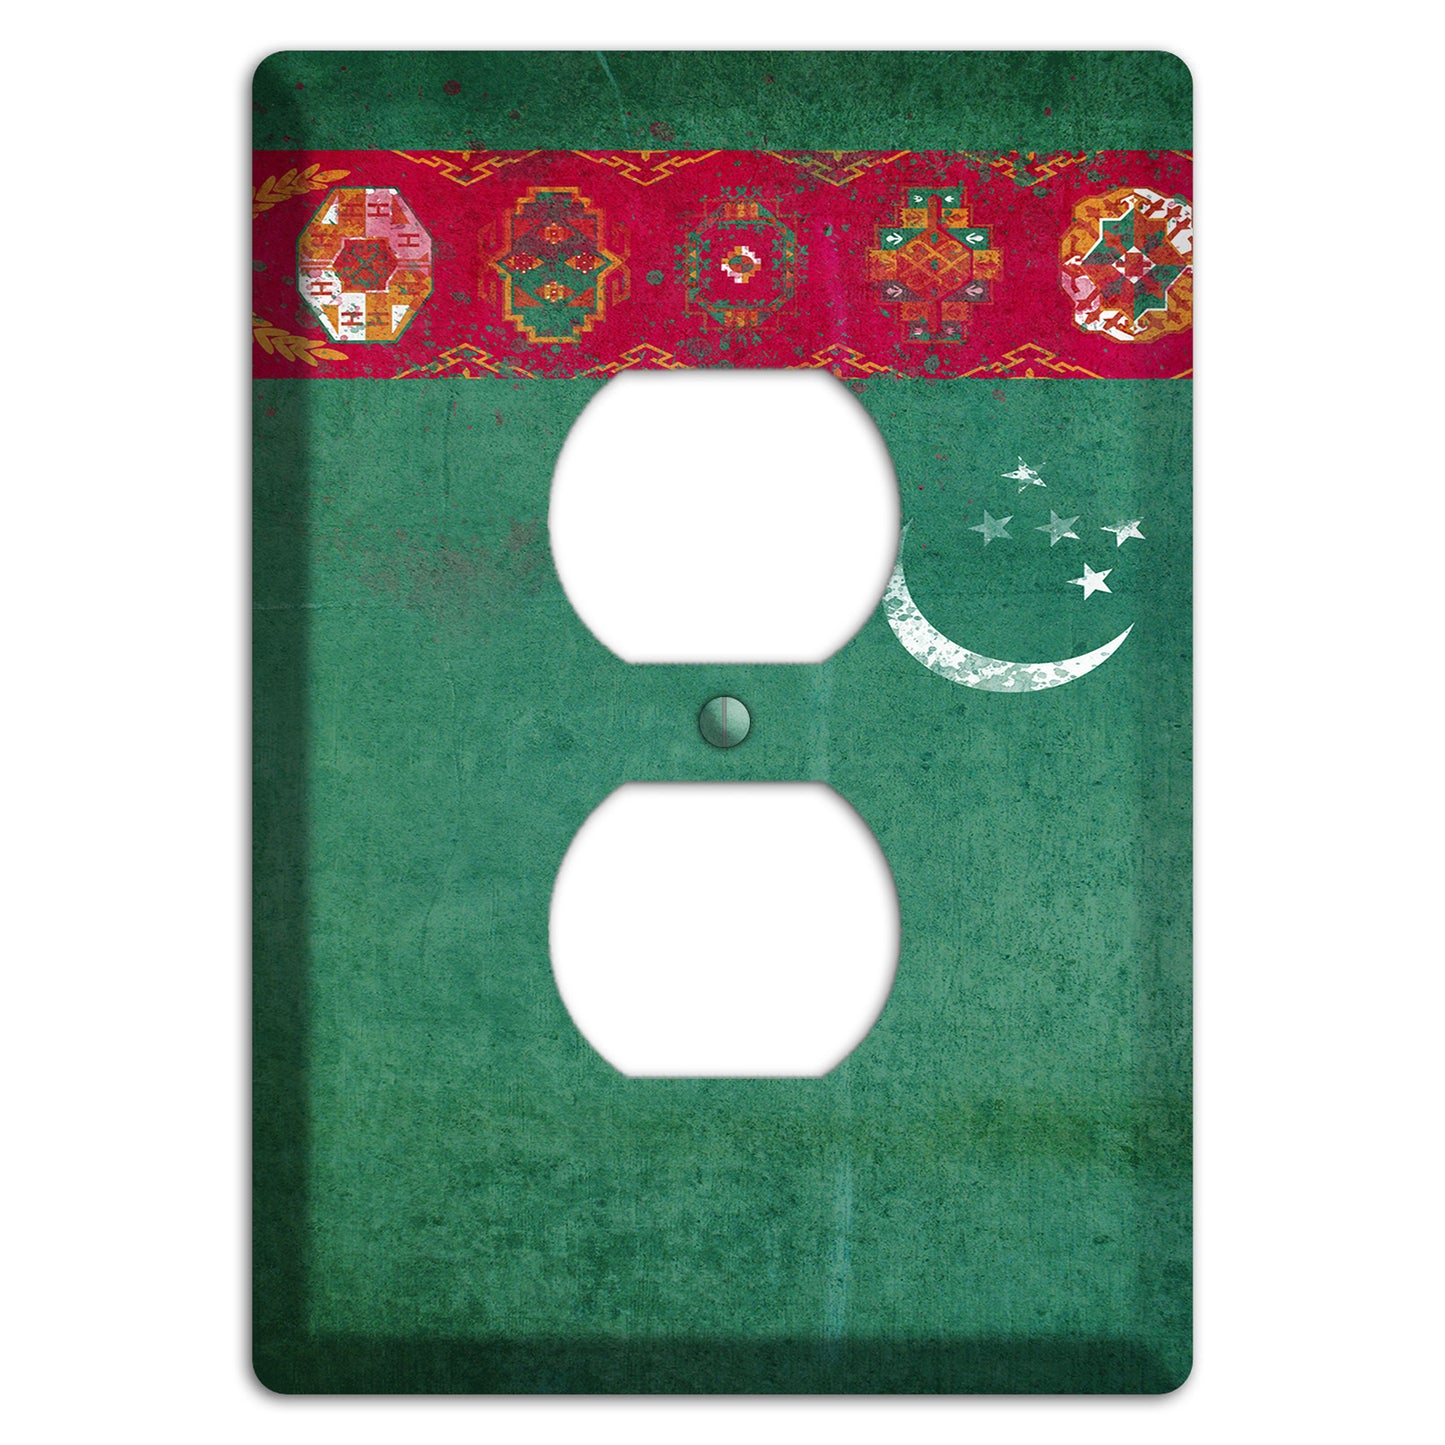 Turkmenistan Cover Plates Duplex Outlet Wallplate